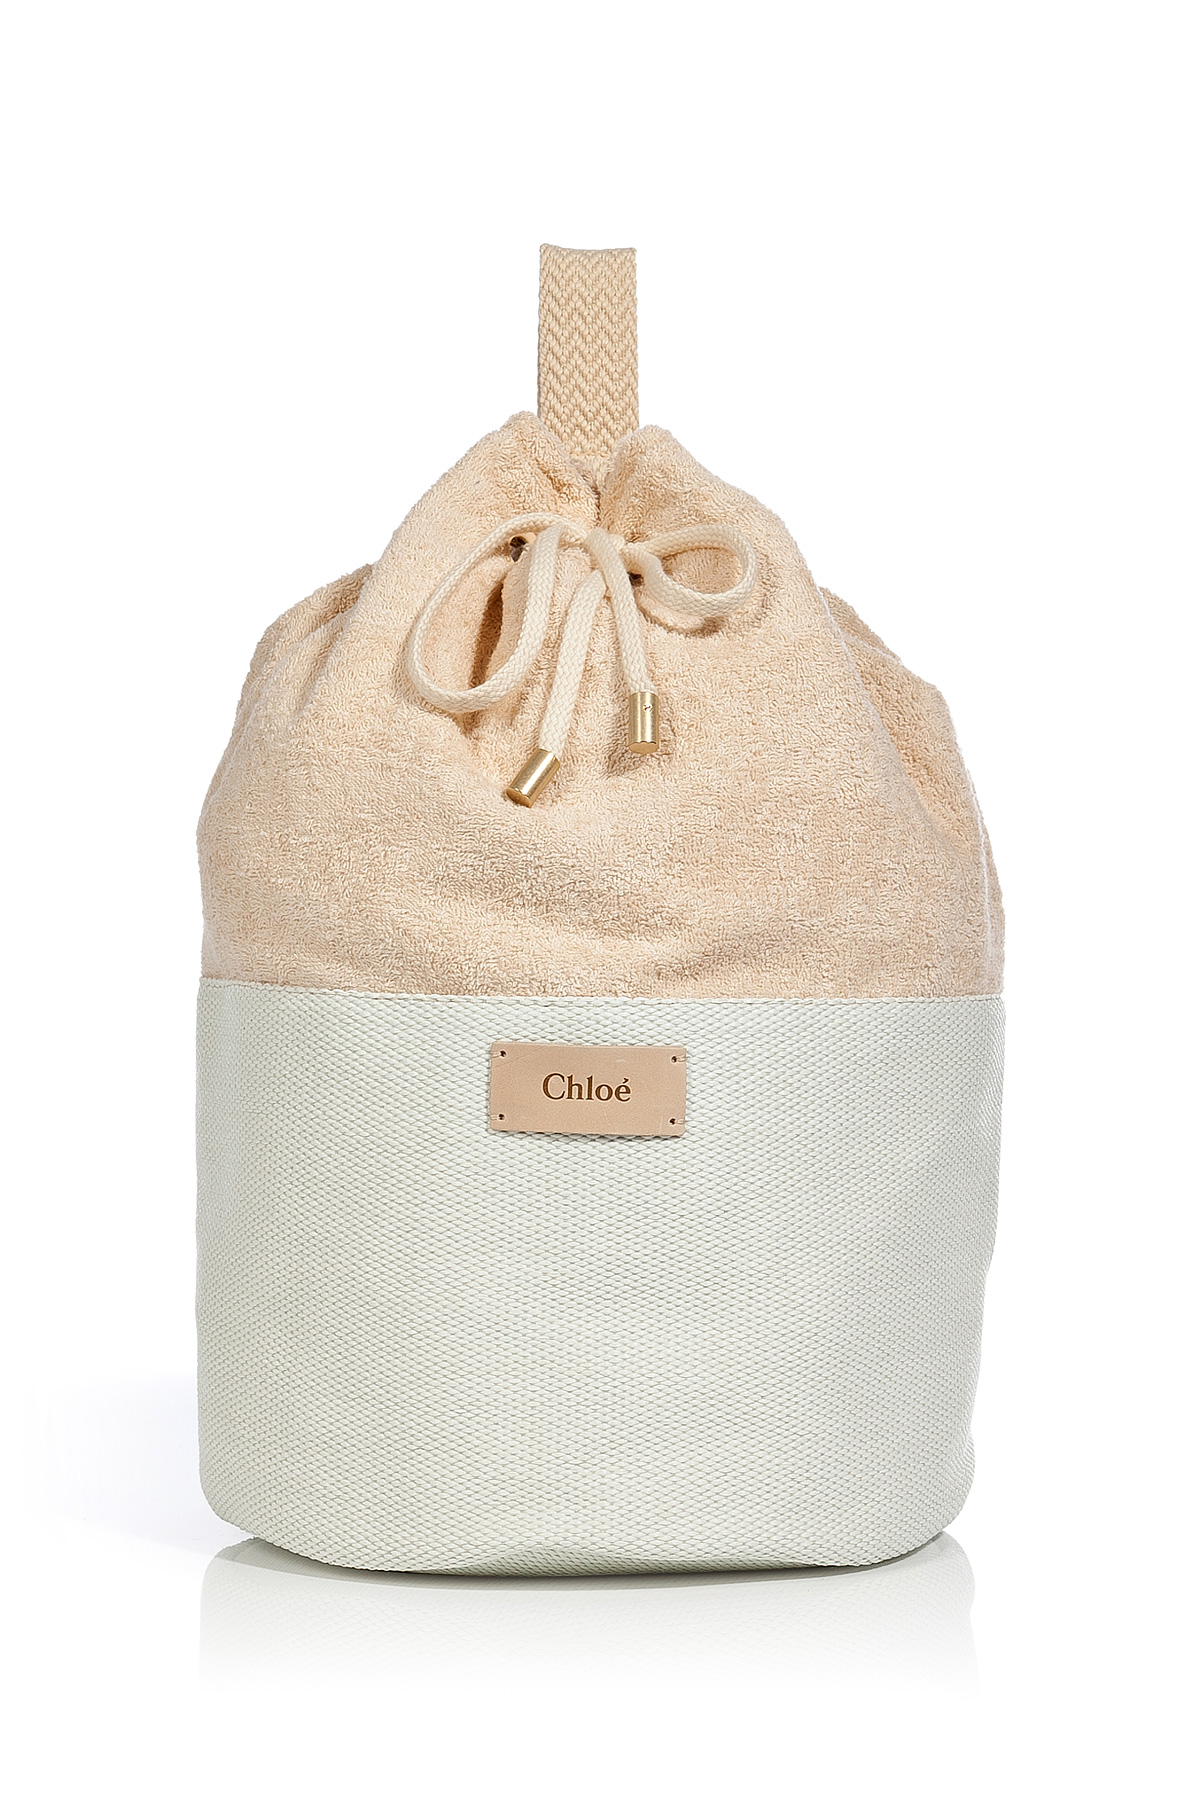 Chloé Creampowder Terrycloth Cottonblend Beach Bag in Natural | Lyst